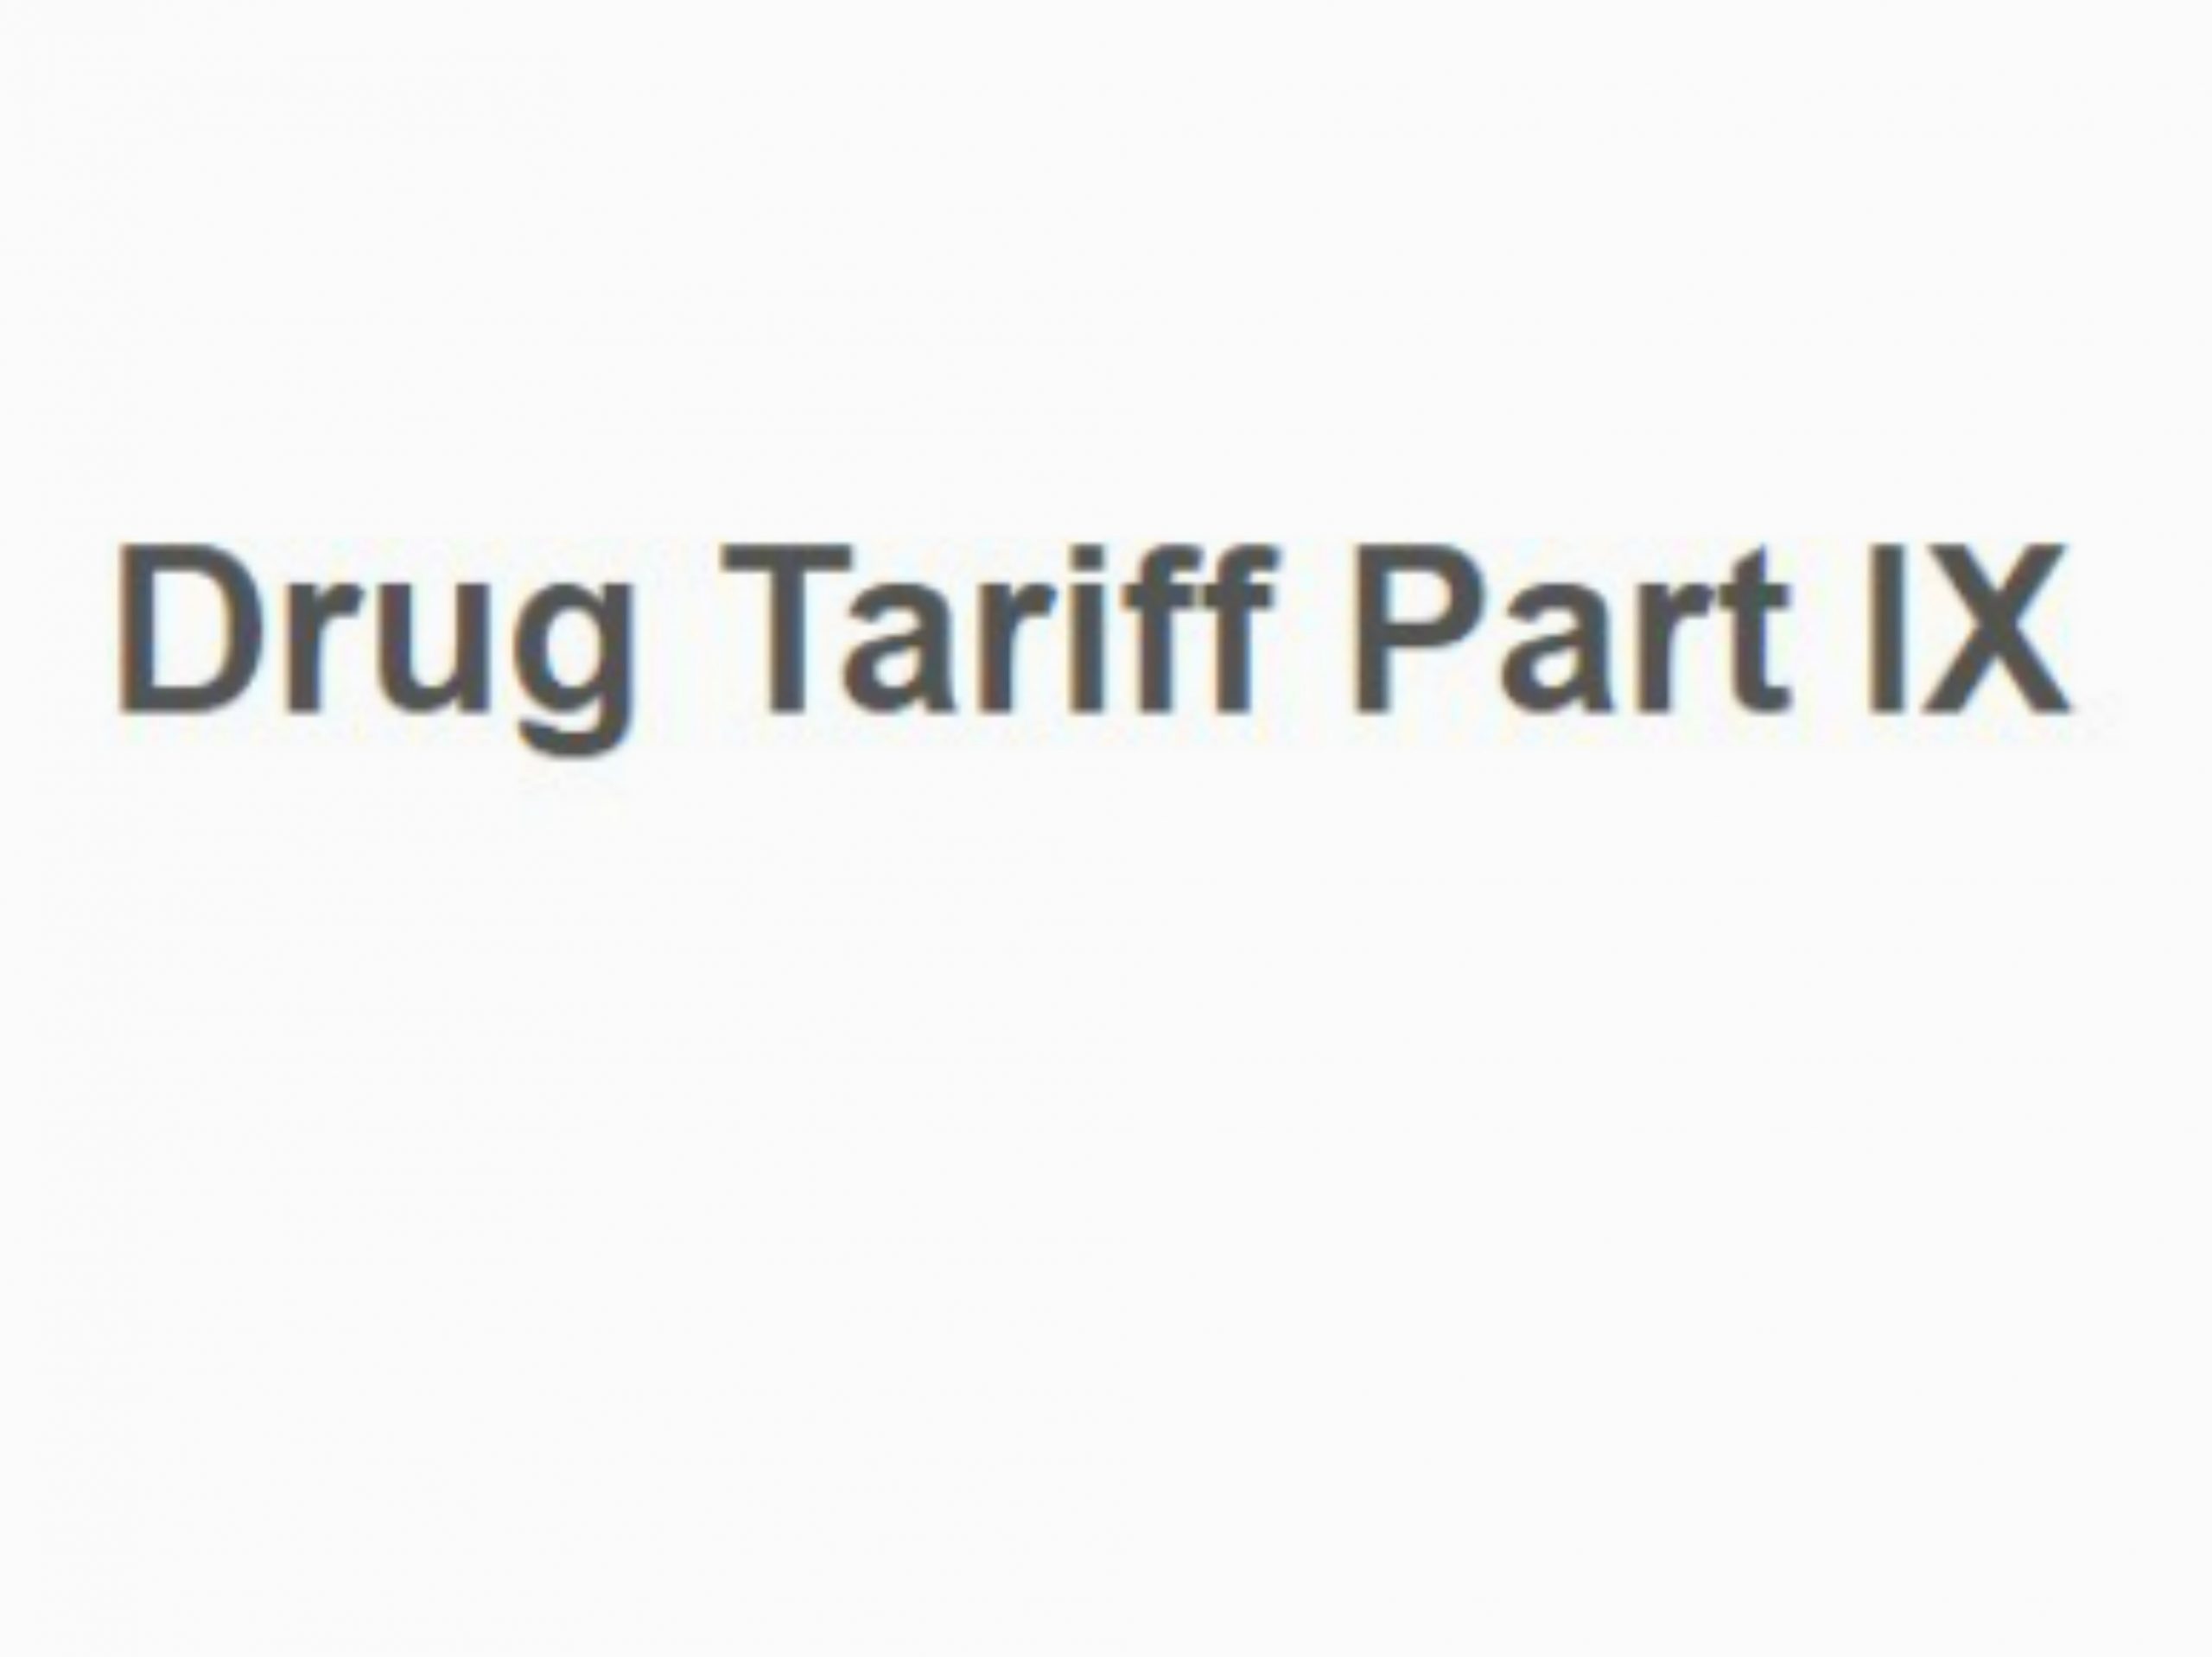 Part IX Industry Drug Tariff Committee